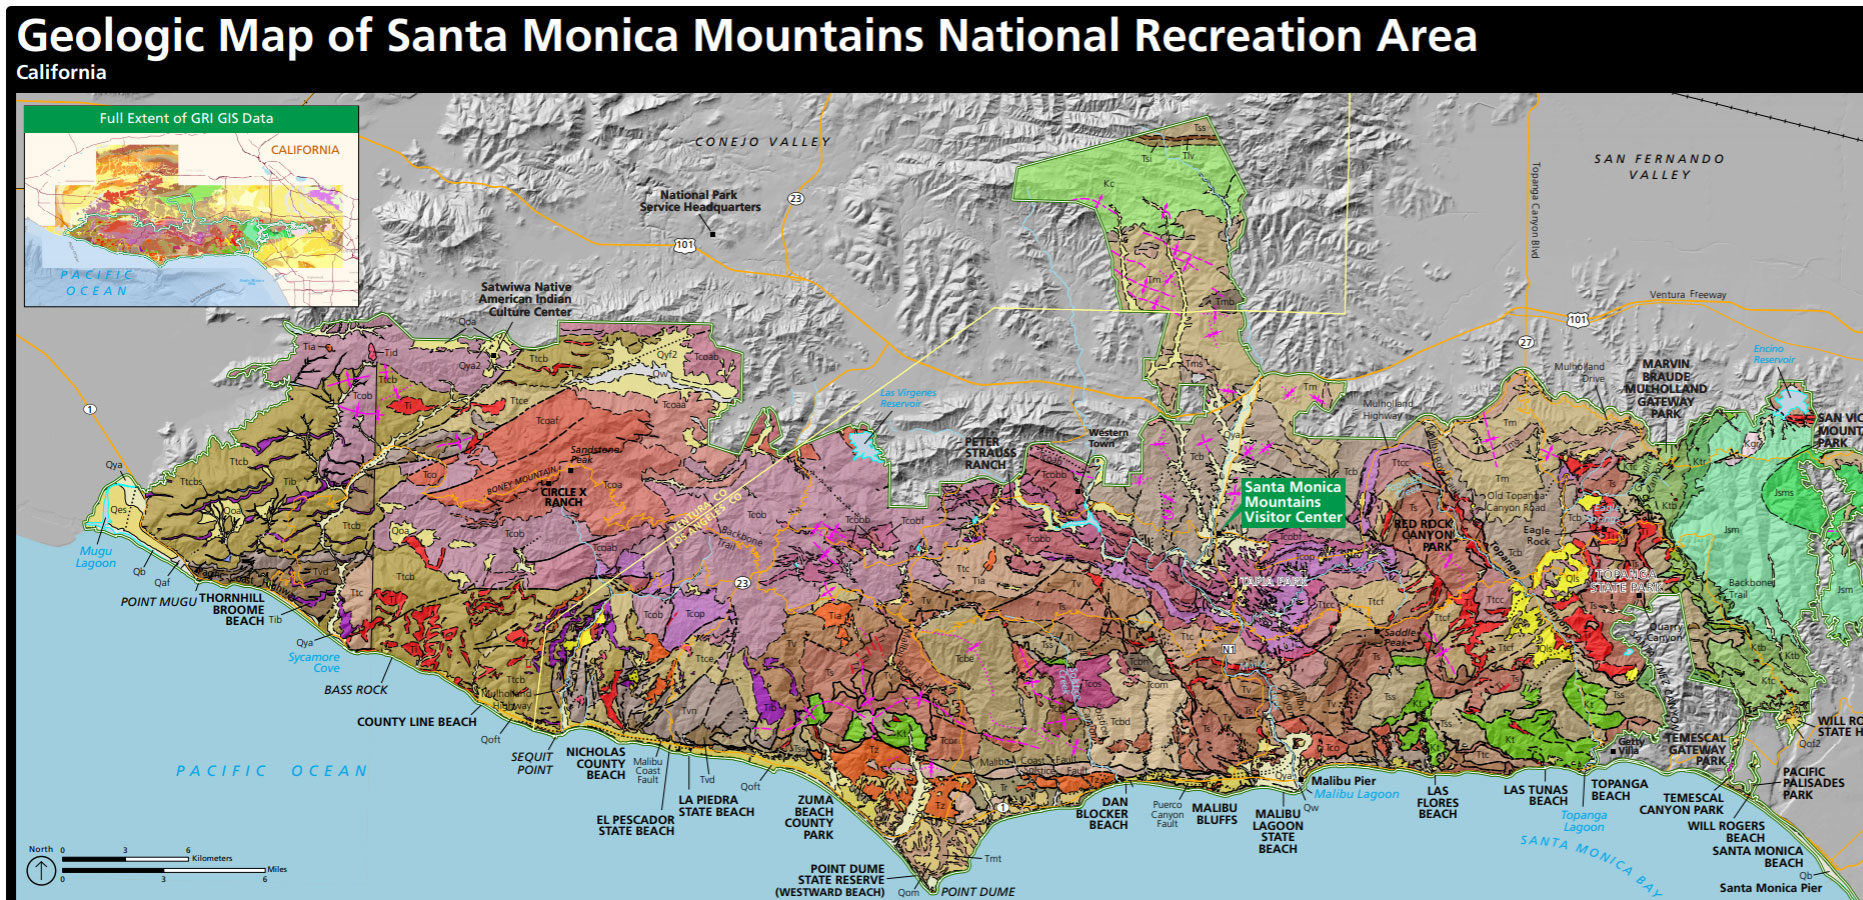 Santa Monica Mountains Trails Map – Franko Maps